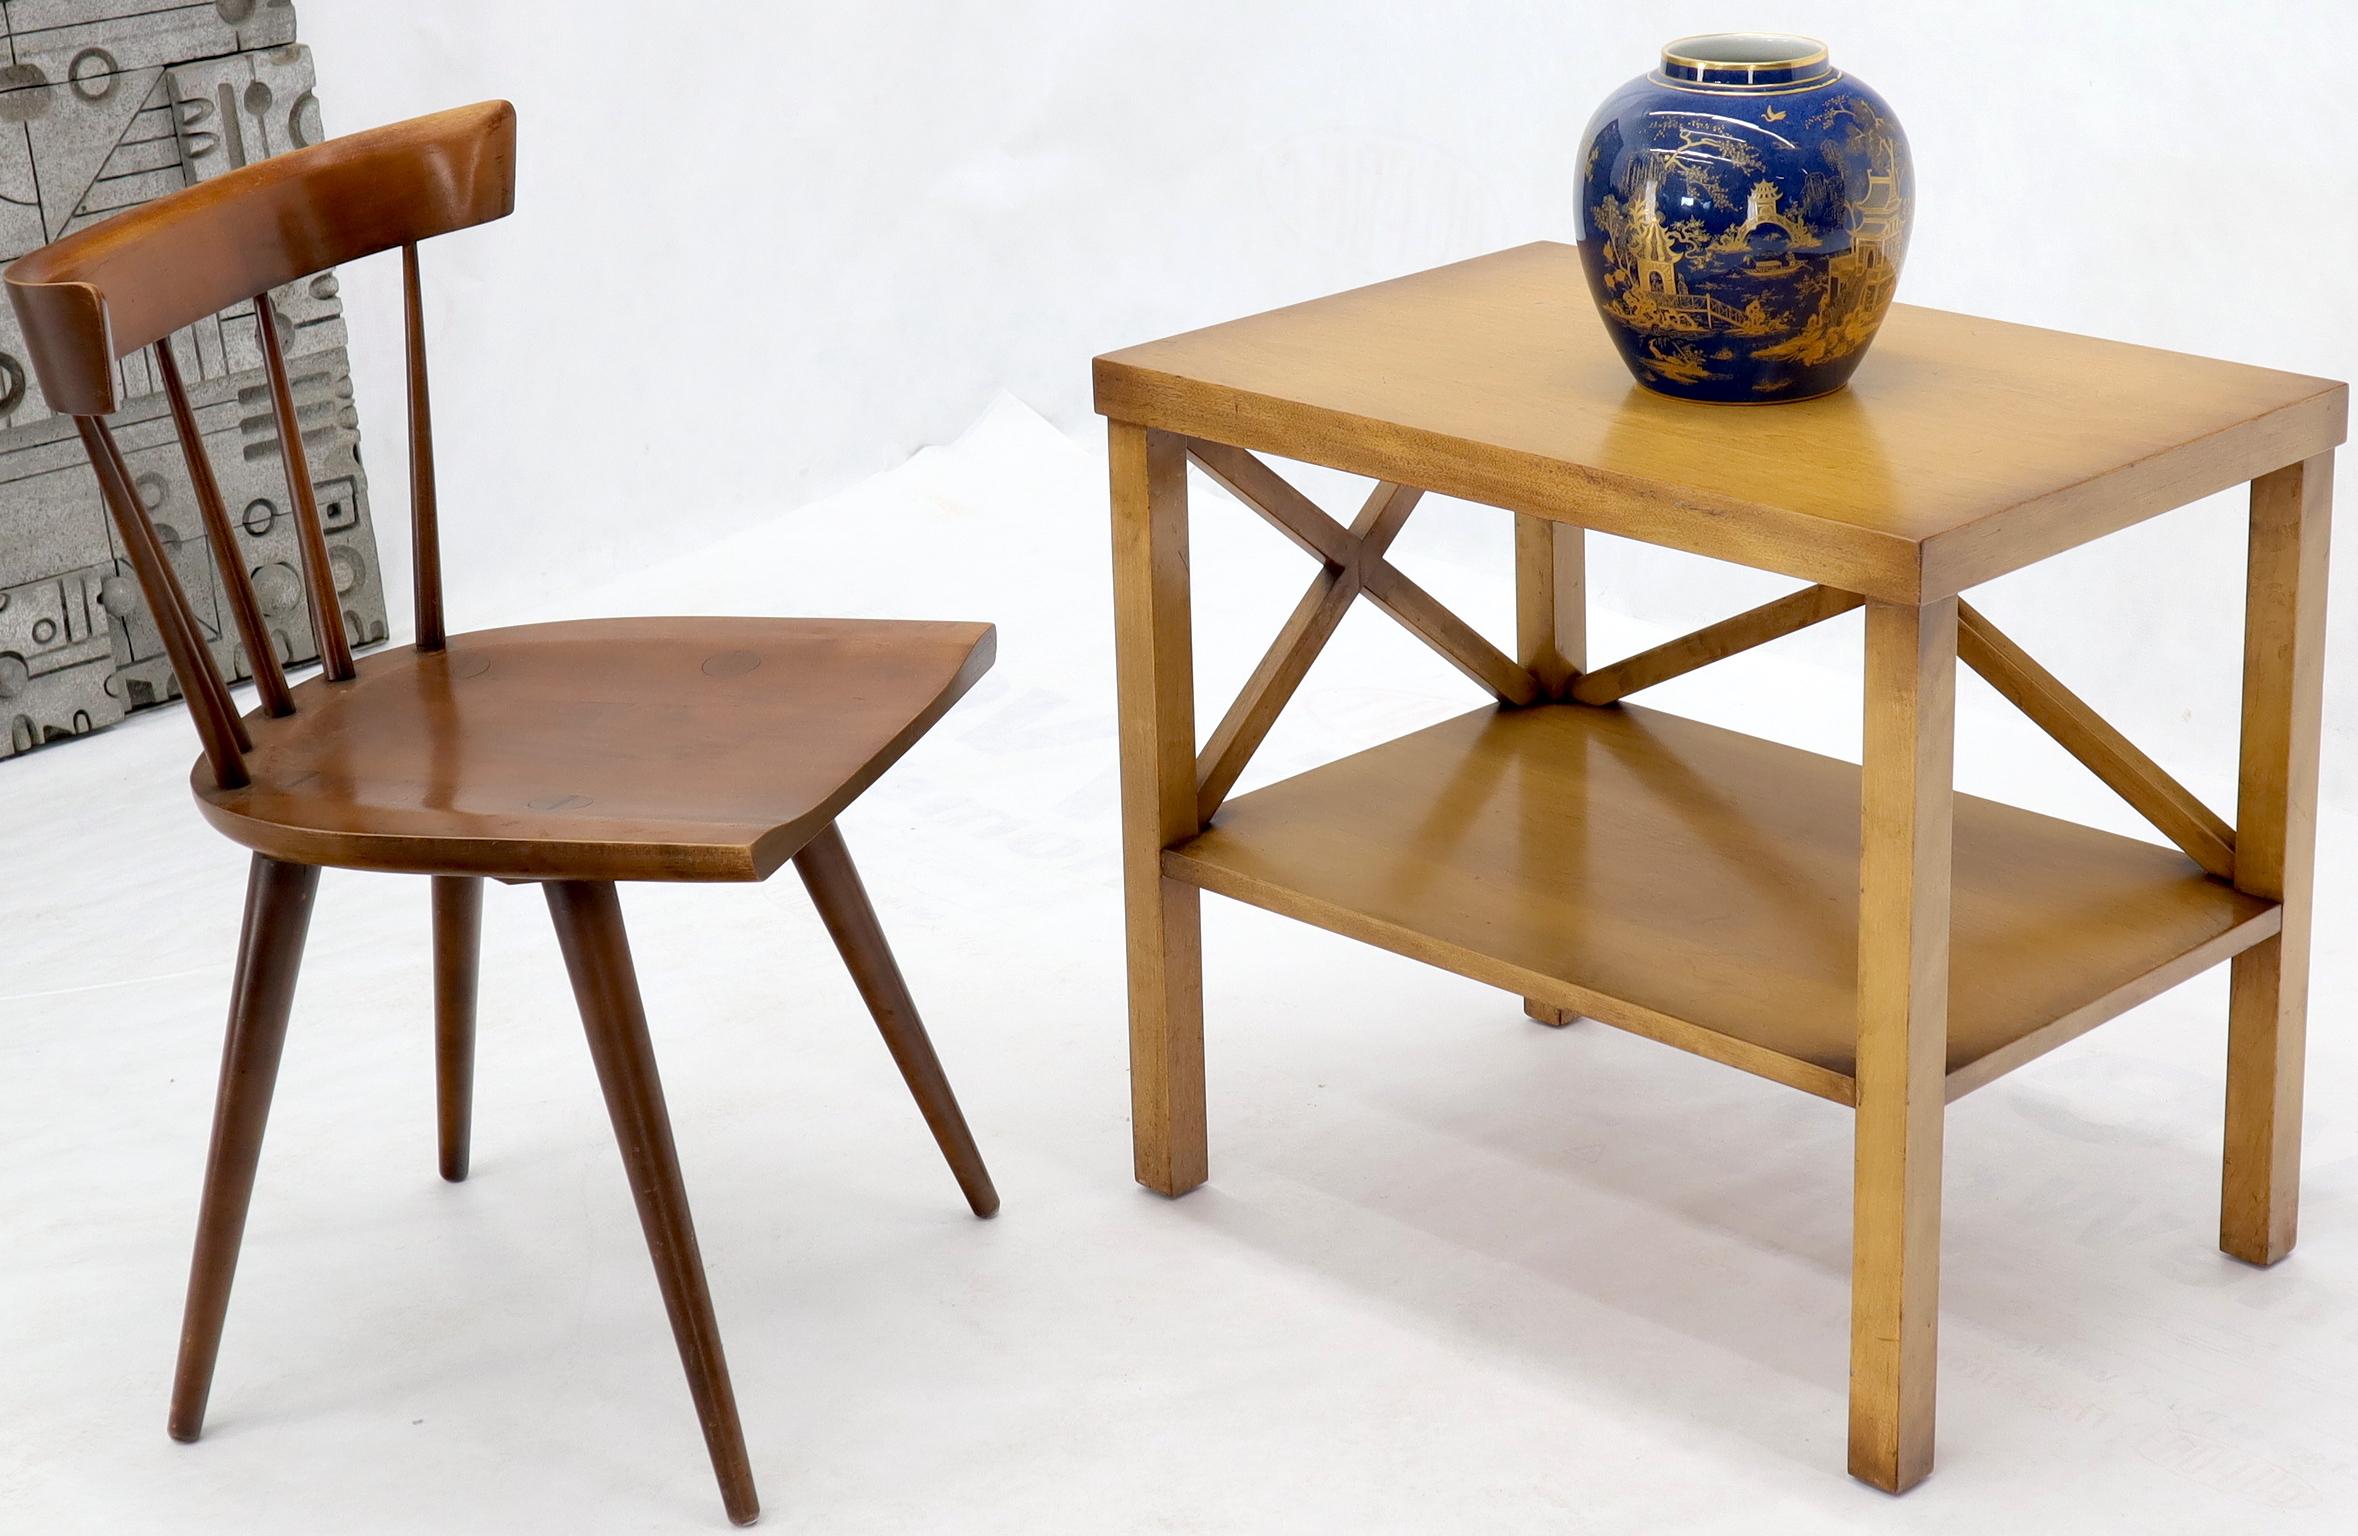 Decorative Mid-Century Modern X-base design end, lamp, corner table stand.